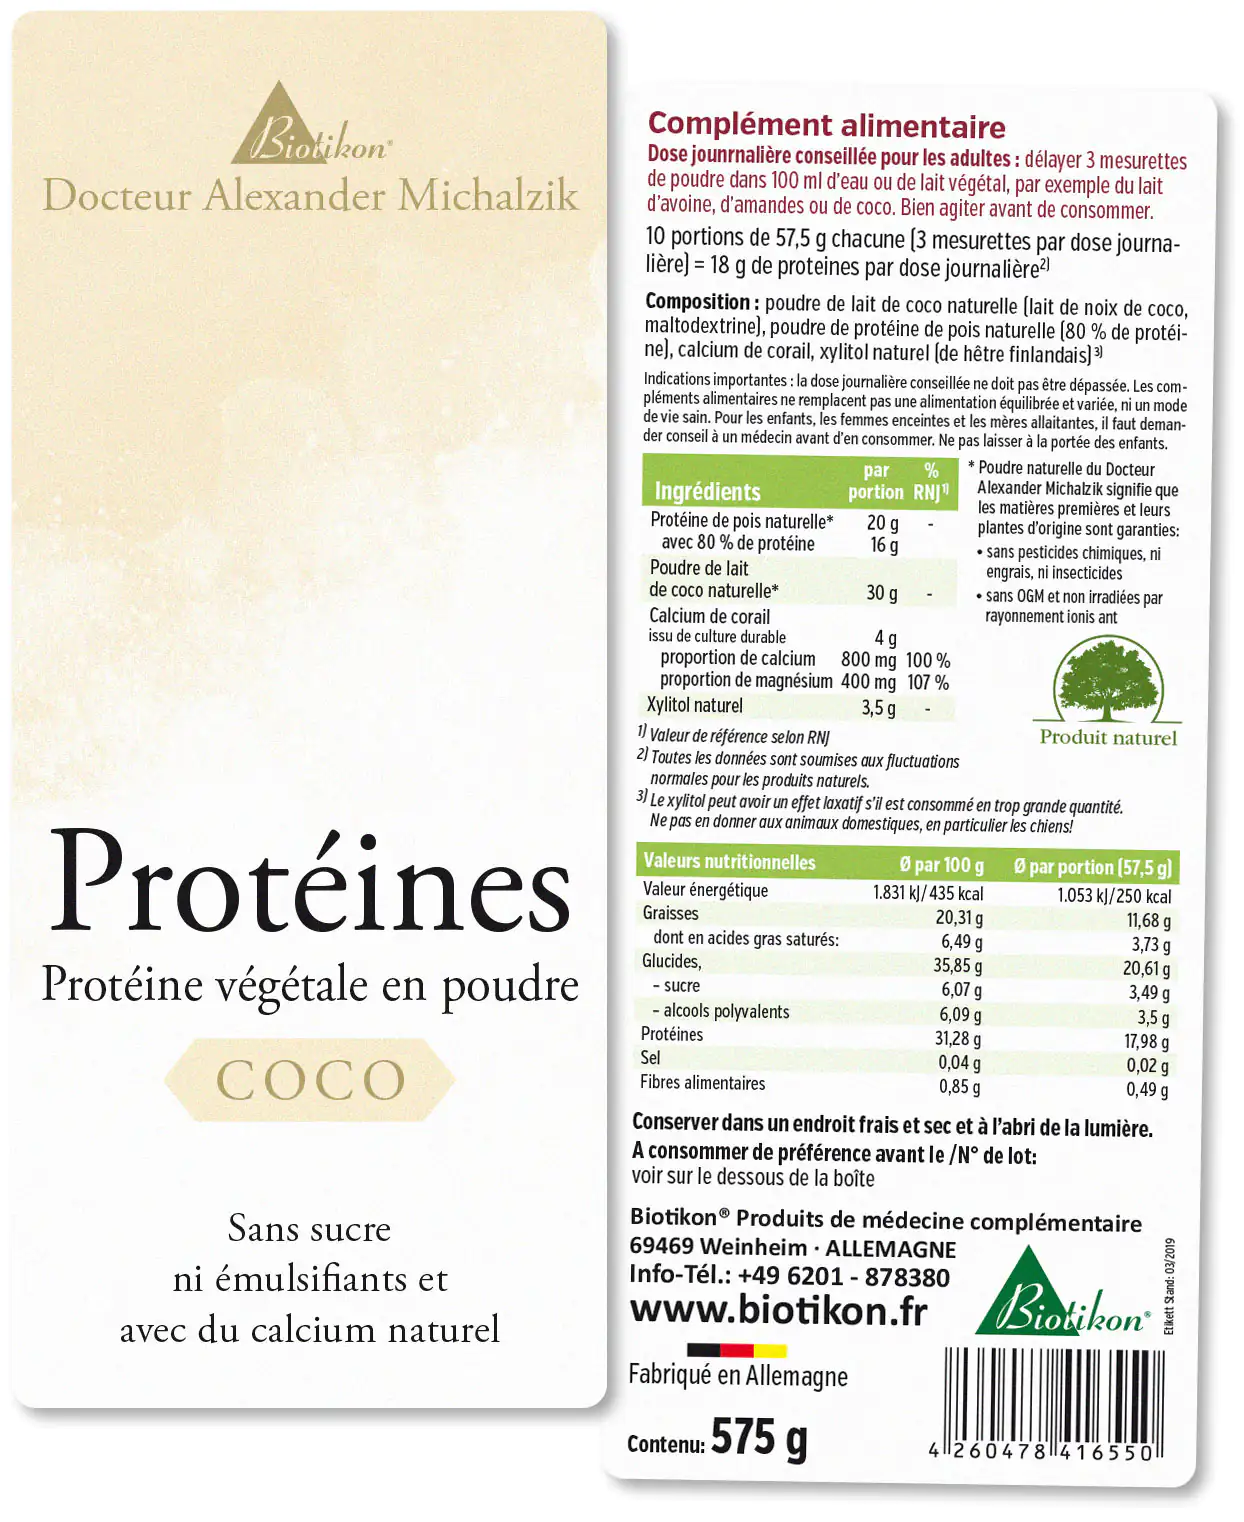 Proteine - 2er-Pack, Aronia + Kokos